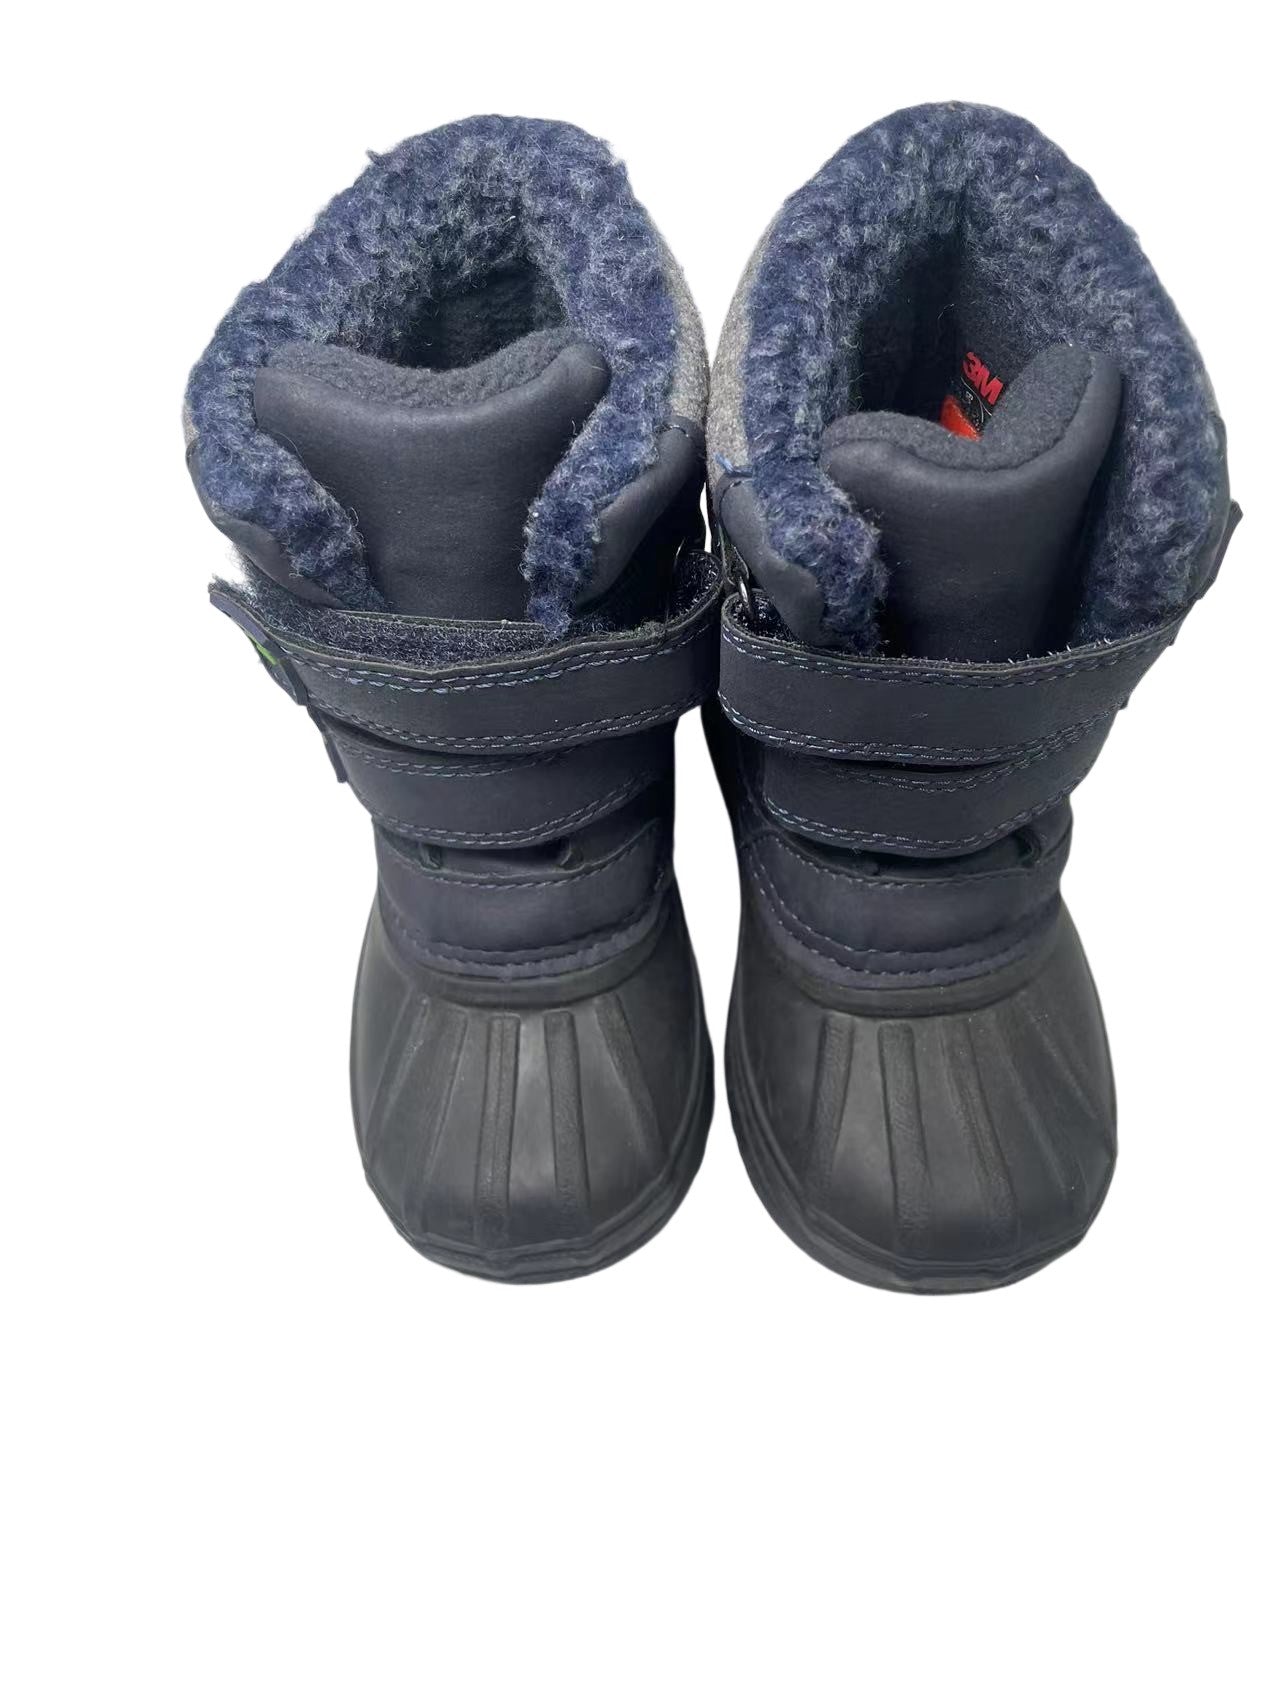 Joe Fresh Winter Boots (US6)-Toddler